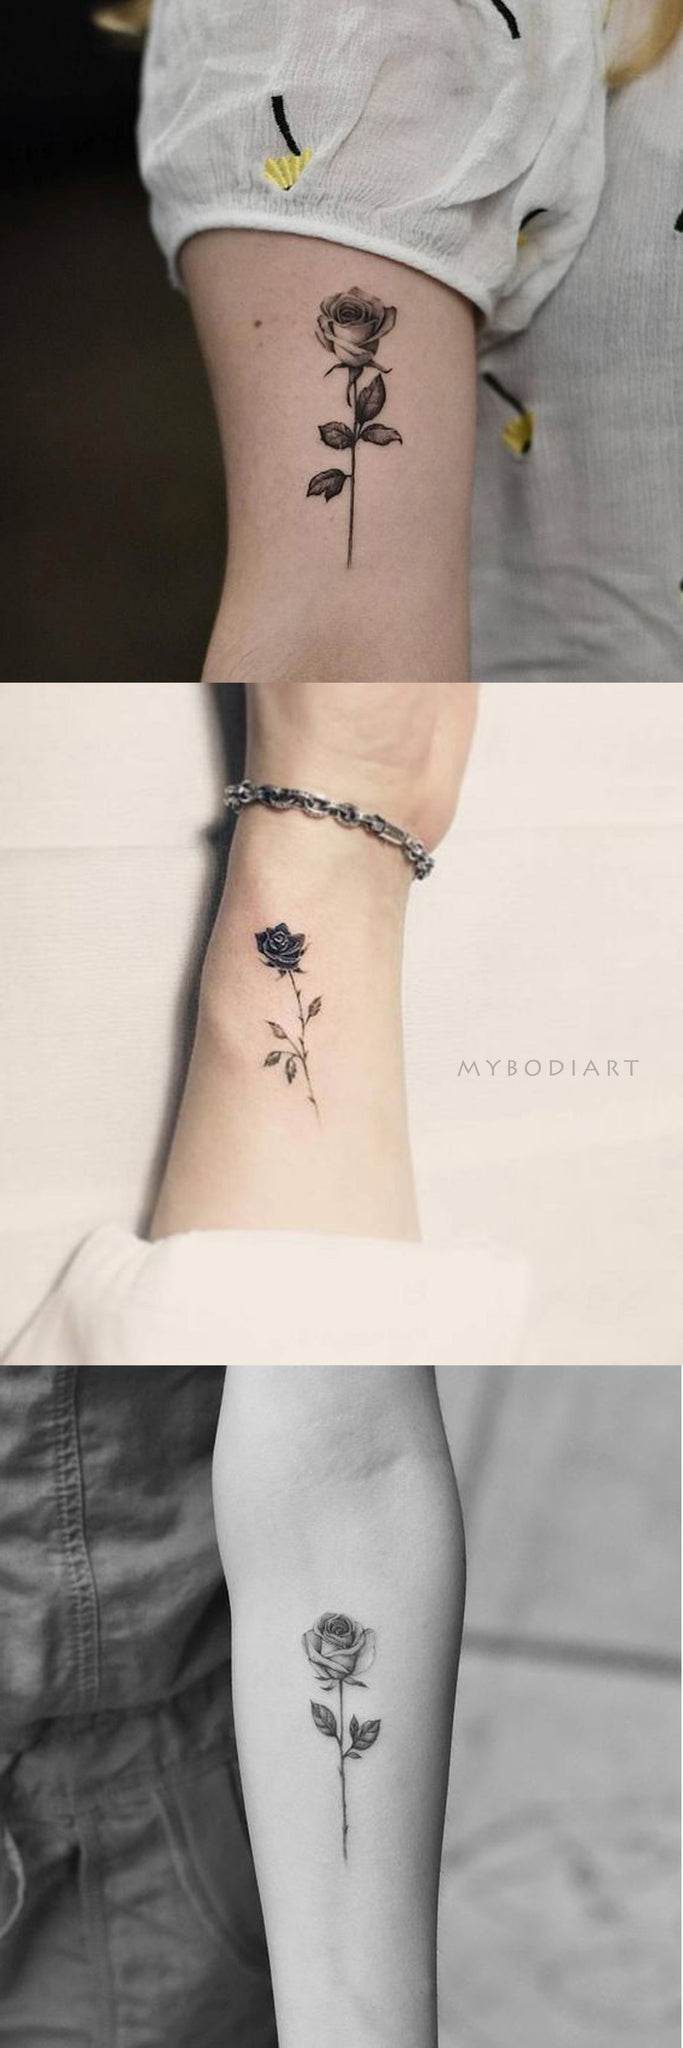 Popular Vintage Black Rose Wrist Arm Tattoo Ideas for Women -  Ideas de tatuaje de brazo de rosa negro vintage para mujeres - www.MyBodiArt.com 